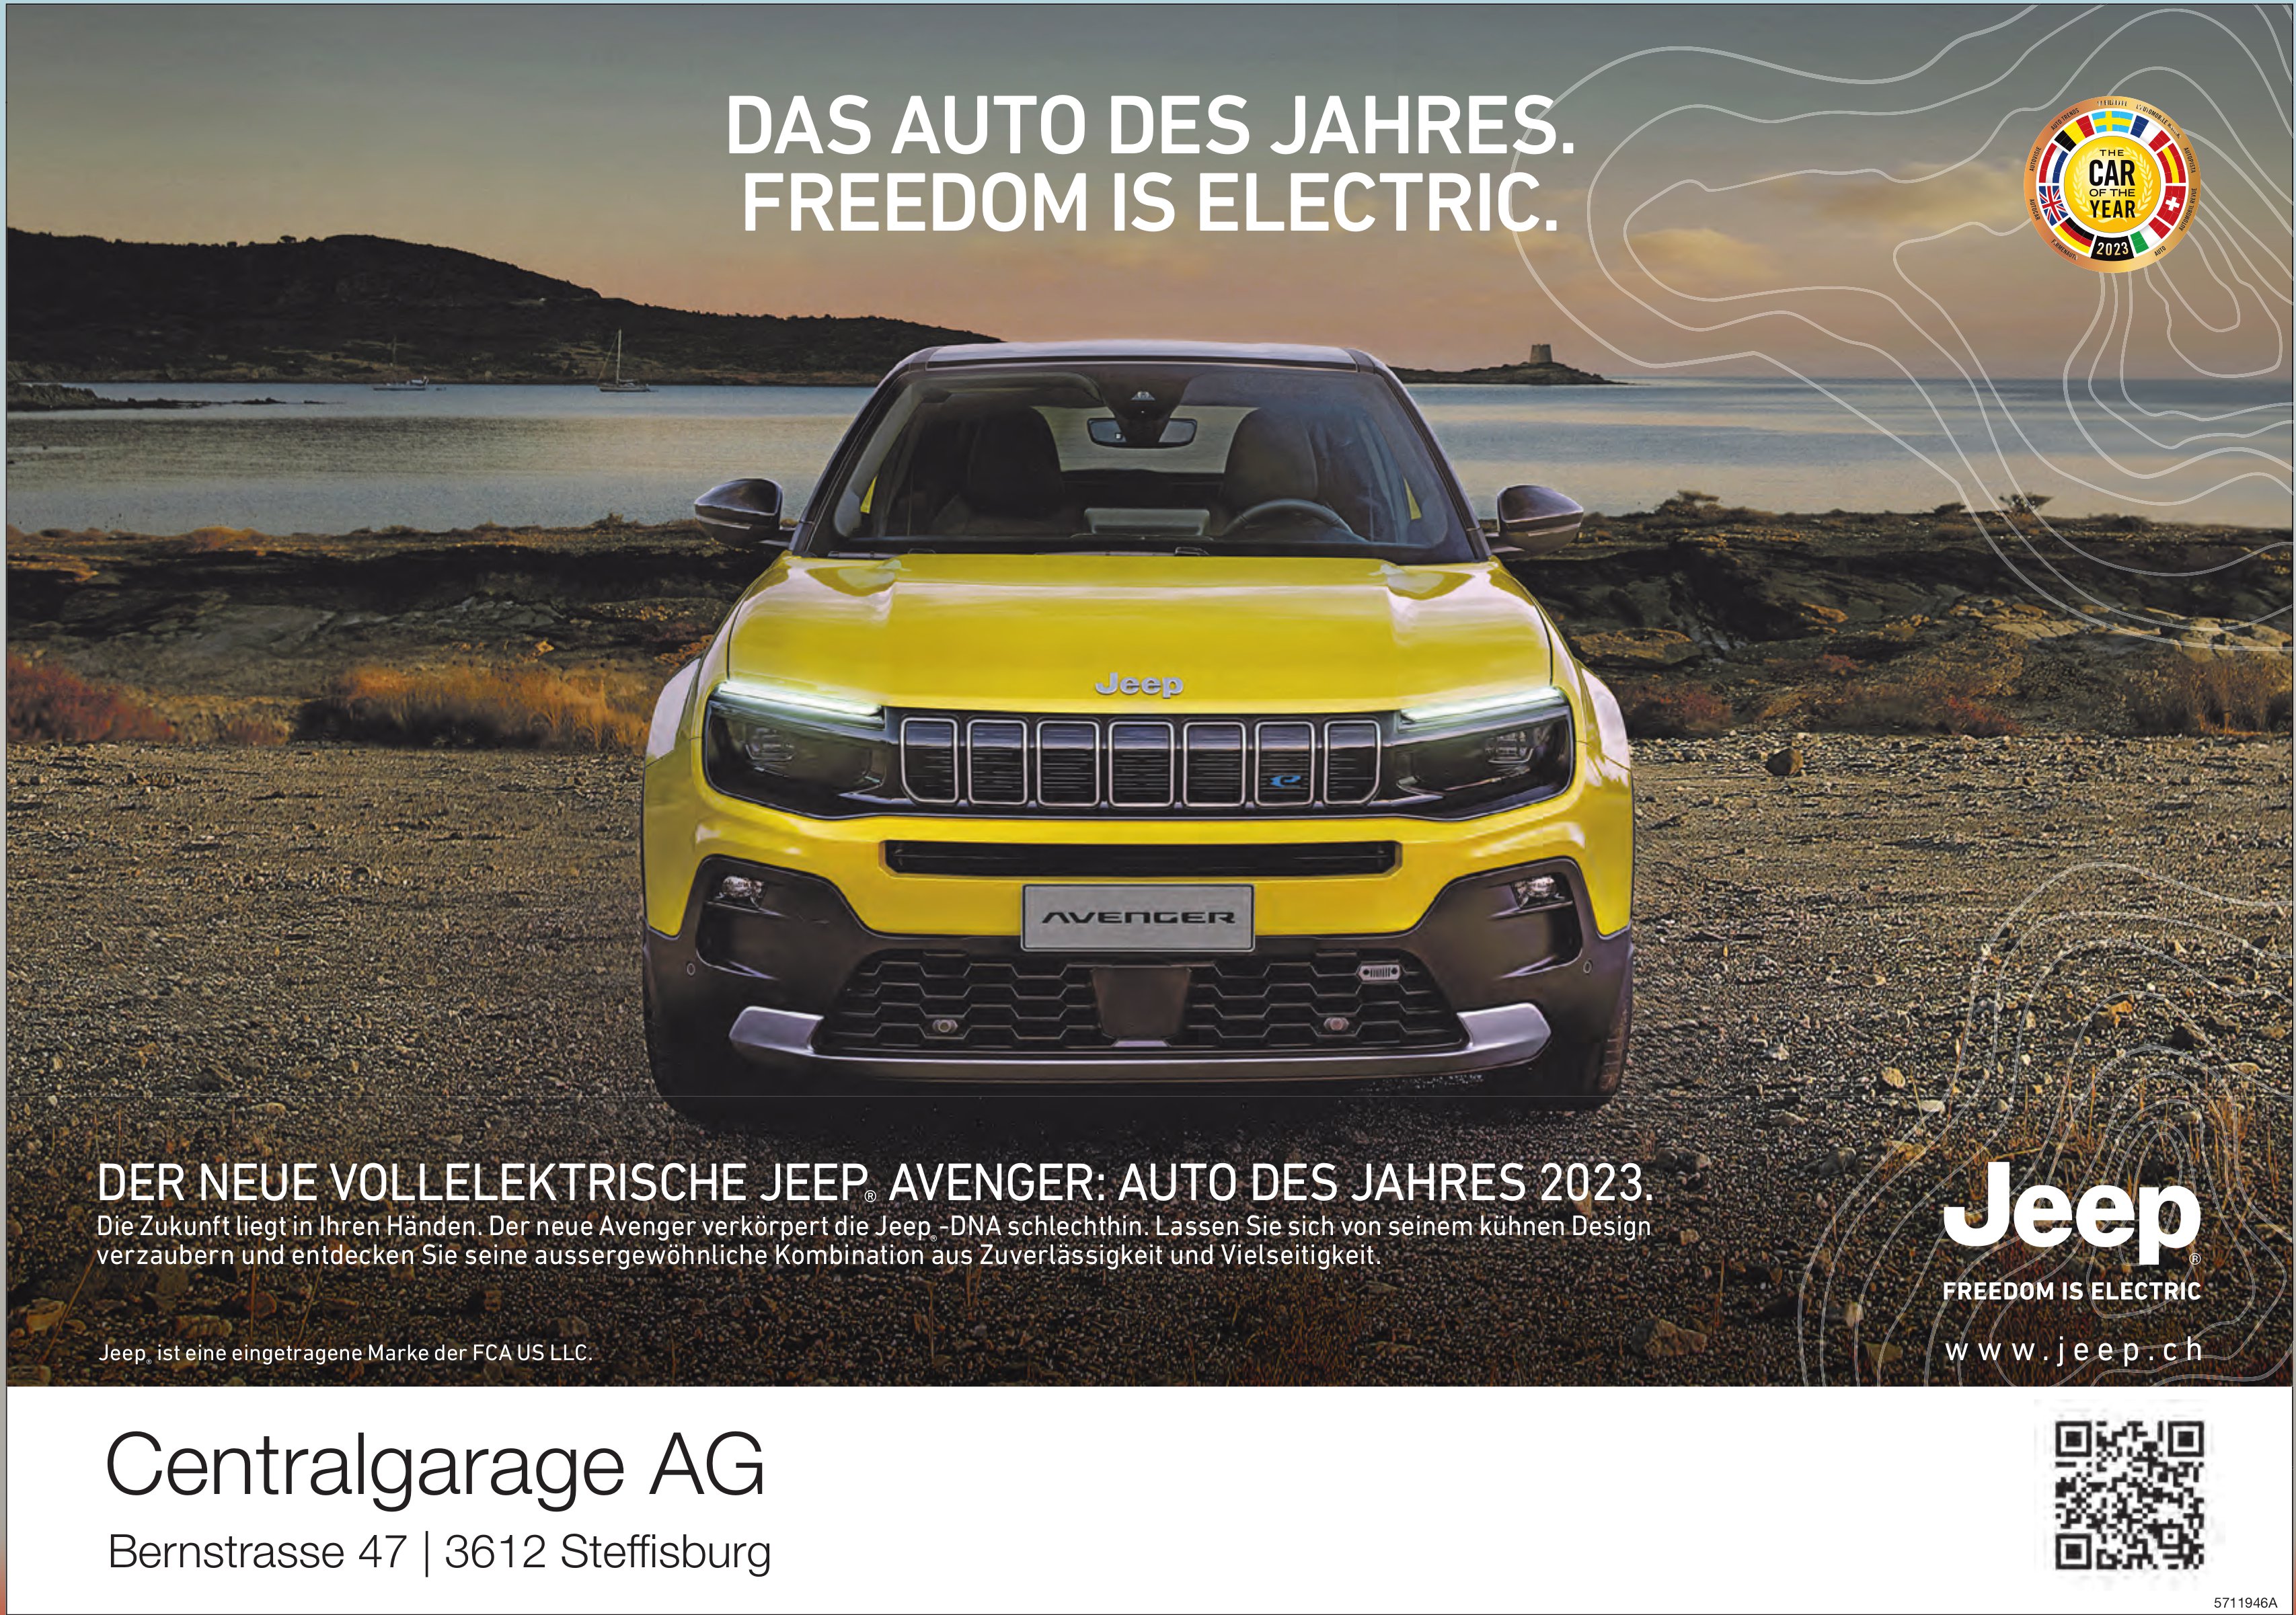 Centralgarage AG, Steffisburg - Jeep Avenger: Das AUTO des Jahres. Freedom is Electric.